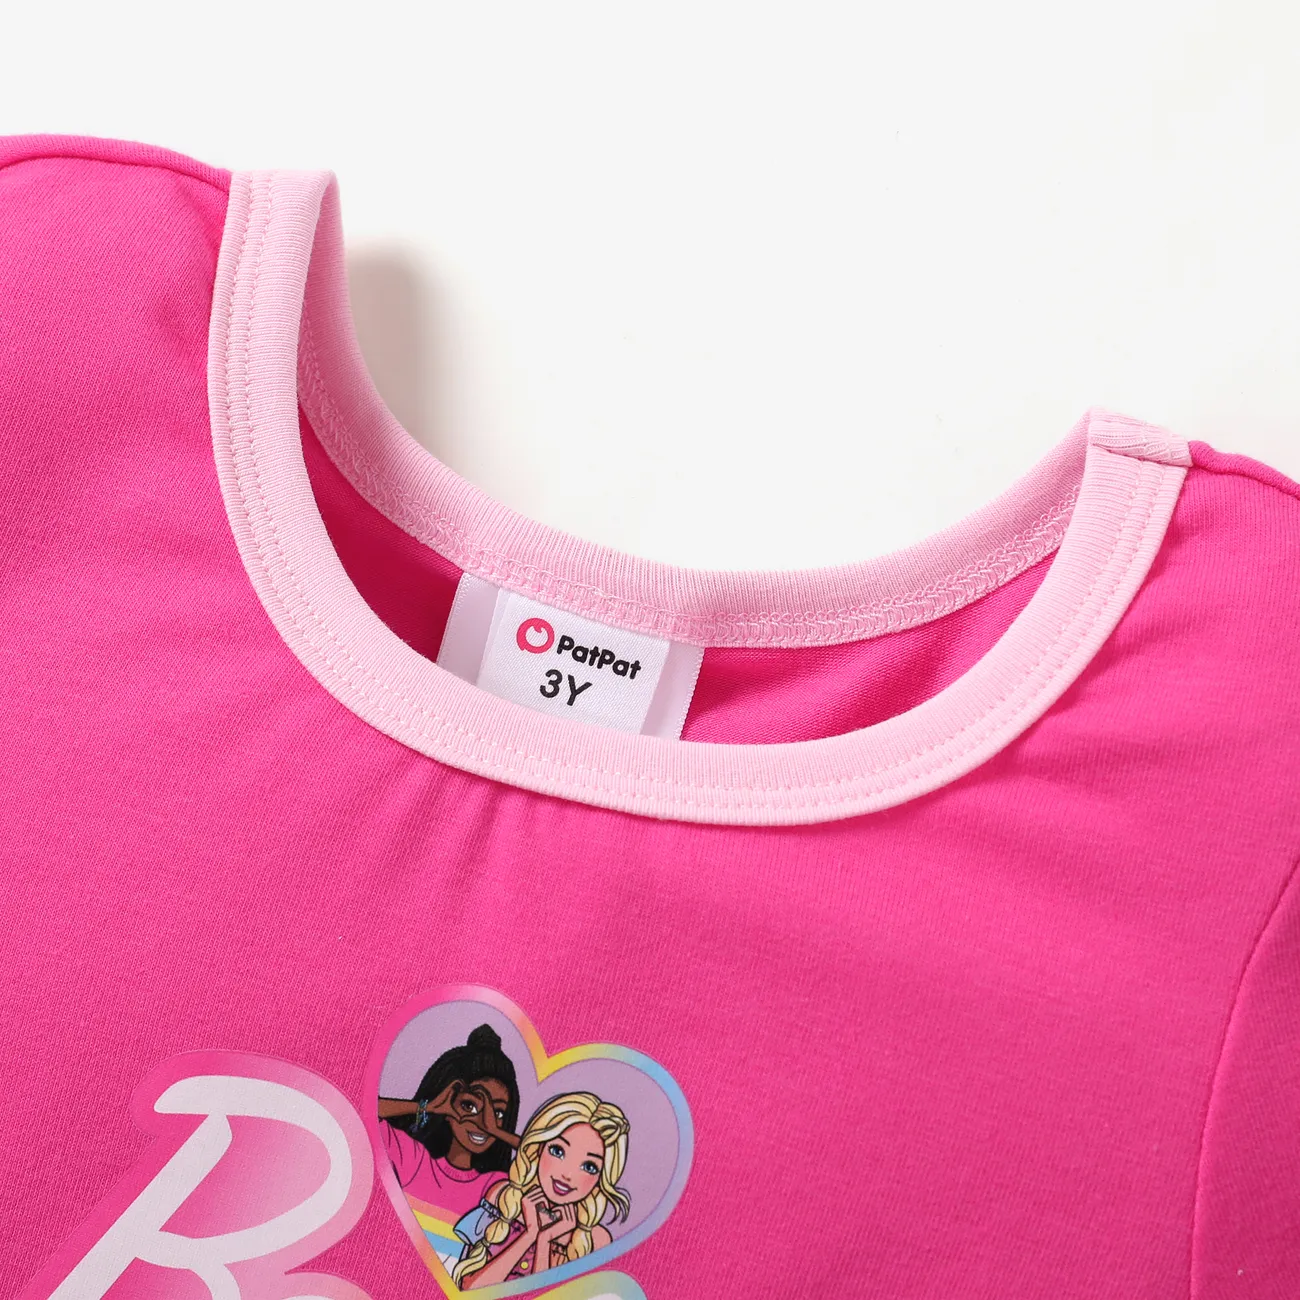 Barbie Fille Doux T-Shirt rose big image 1